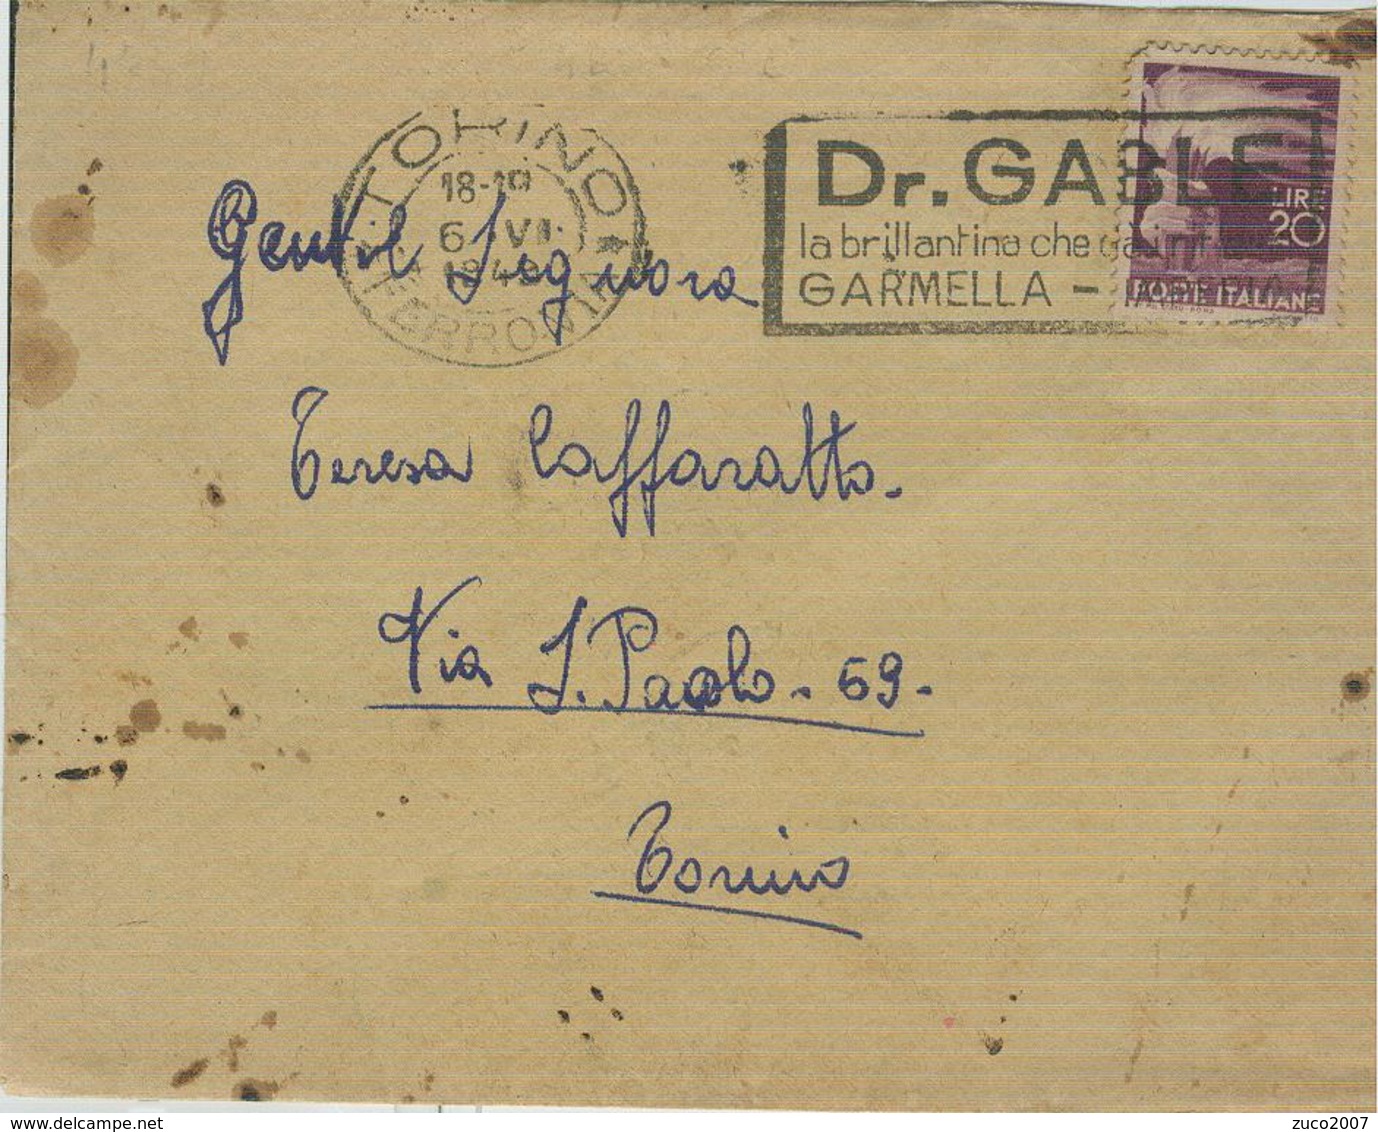 "DR.GABLE-la Brillantina Che Da I Riflessi- GARMELLA IMPERIA" TIMBRO POSTE TORINO TARGHETTA,1949, - 1946-60: Storia Postale